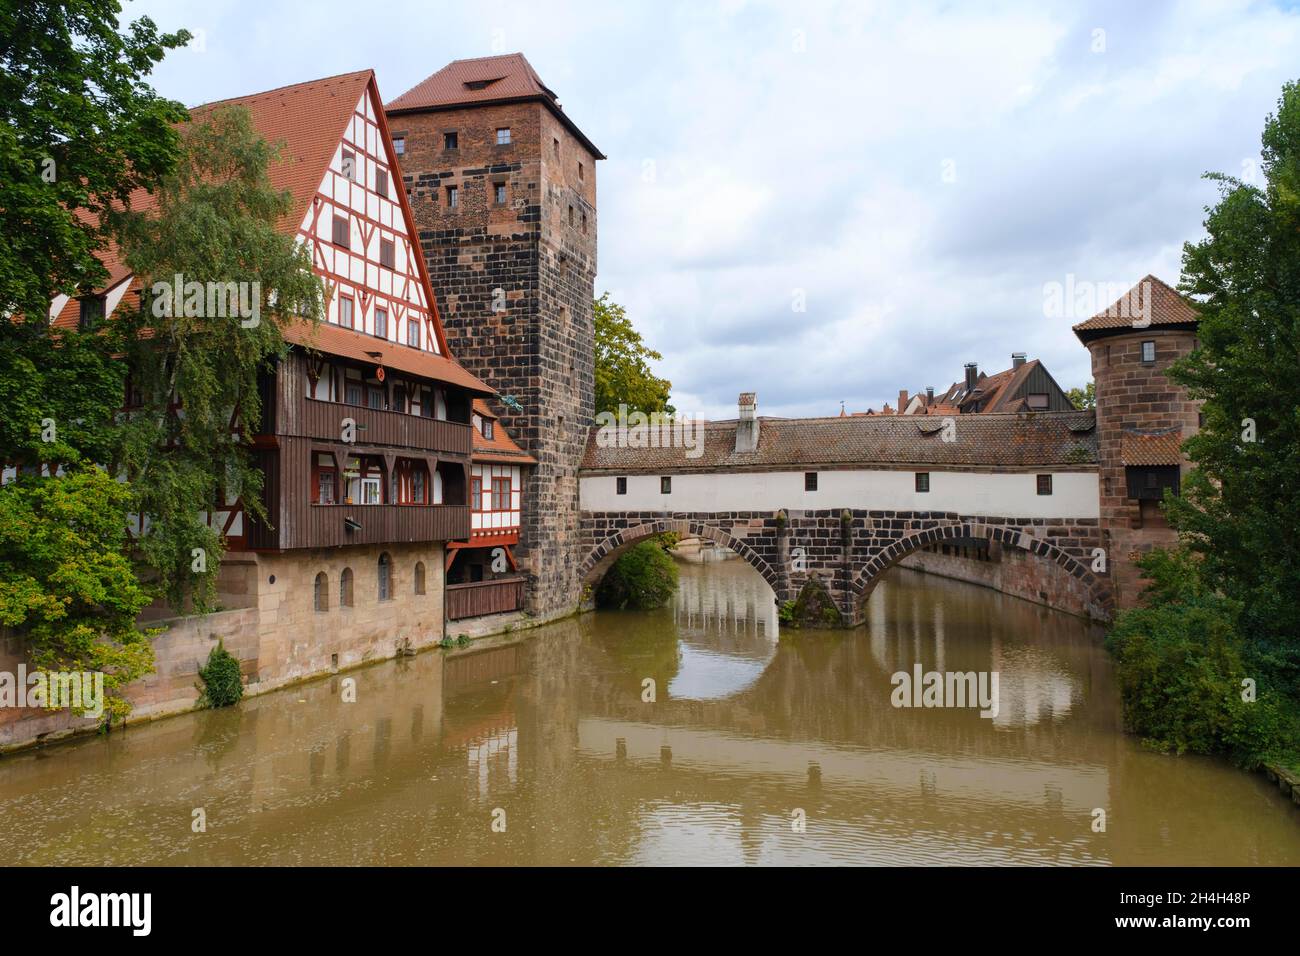 Weinstadel and Henkersteg on the River Pegnitz, Old Town, Nuremberg, Franconia, Bavaria, Germany Stock Photo